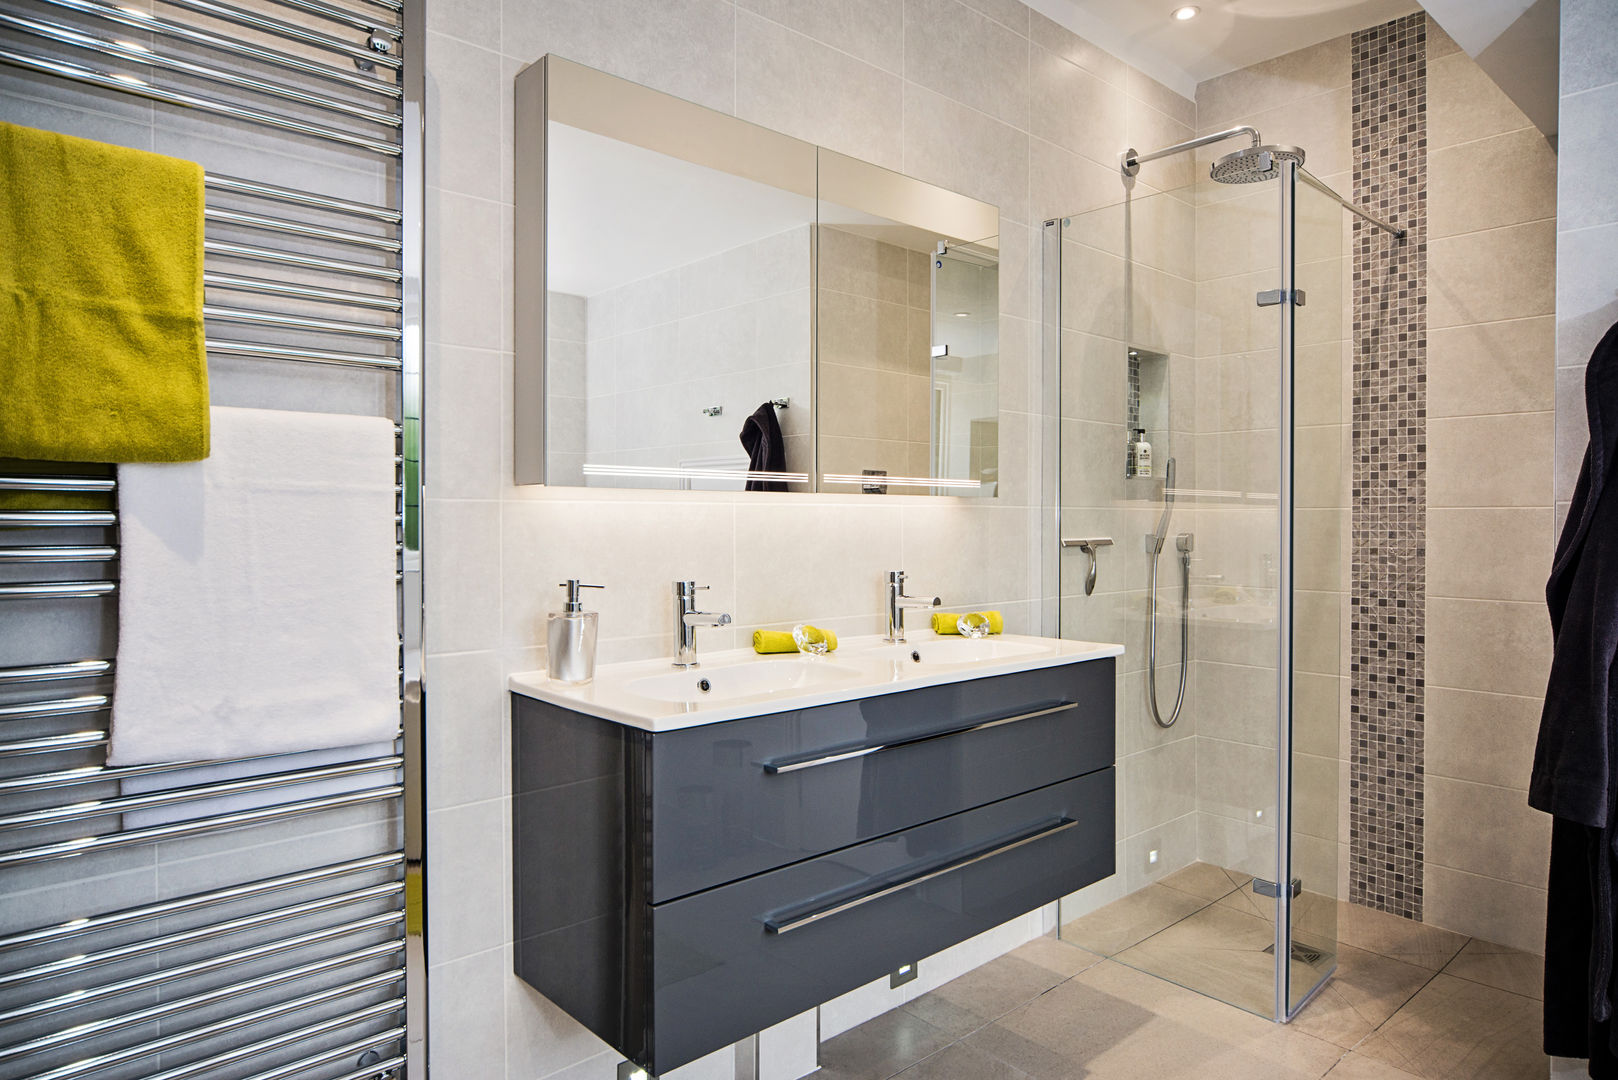 Mr & Mrs D, En-Suite, Guildford Raycross Interiors Modern bathroom bathroom design,installation,mosaic tiles,walk-in shower,free-standing bath,mirror cabinet